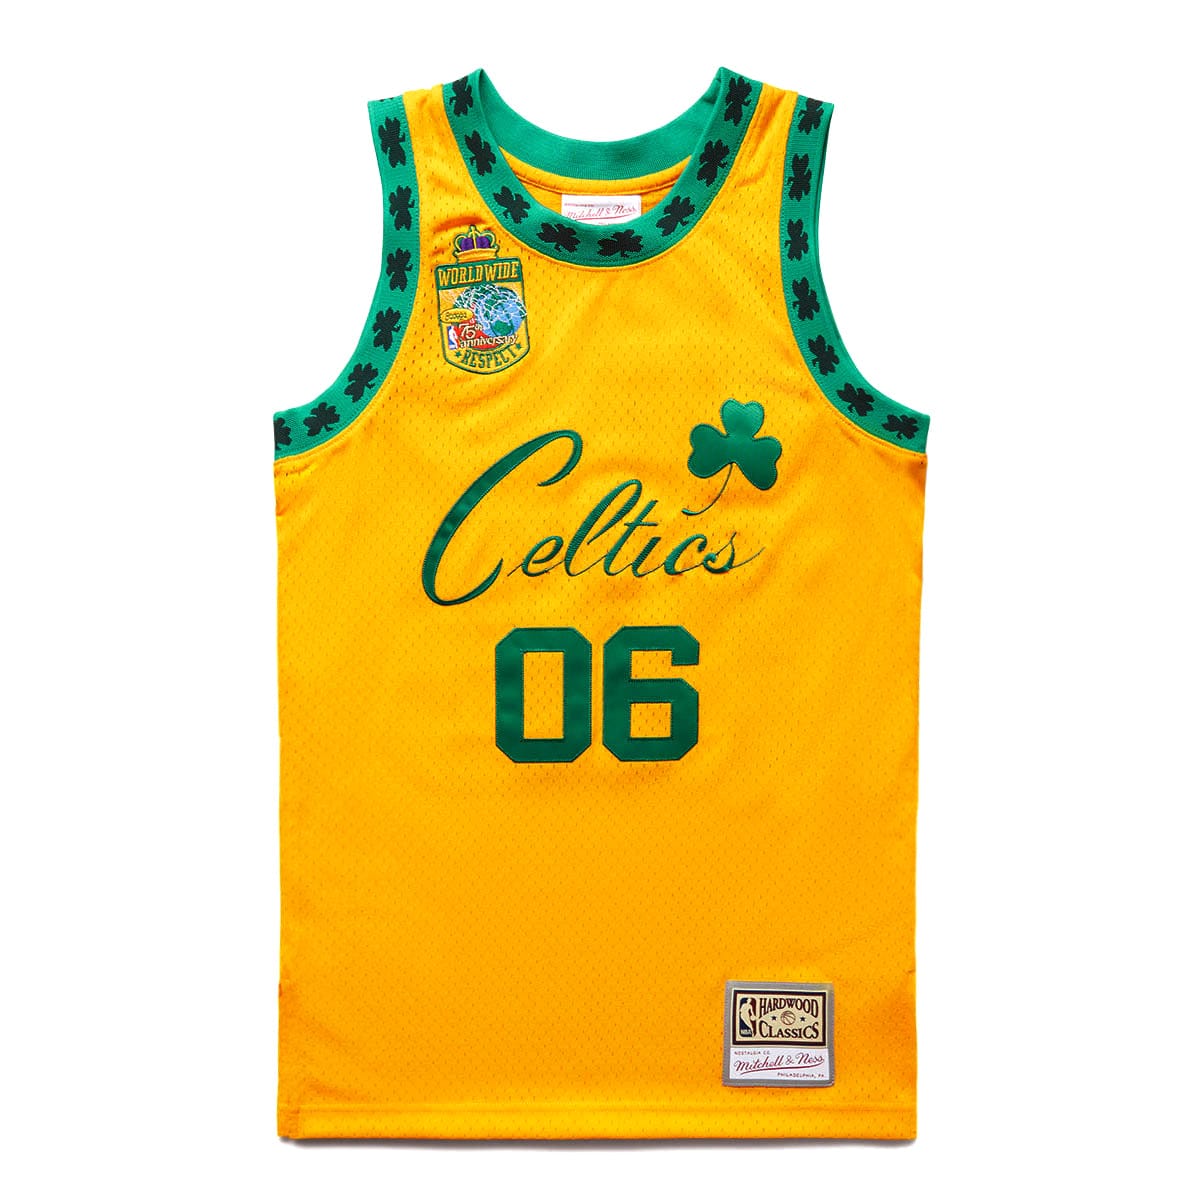 Boston Celtics Wear Blue/Yellow Warm-up Jerseys in NBA Playoffs